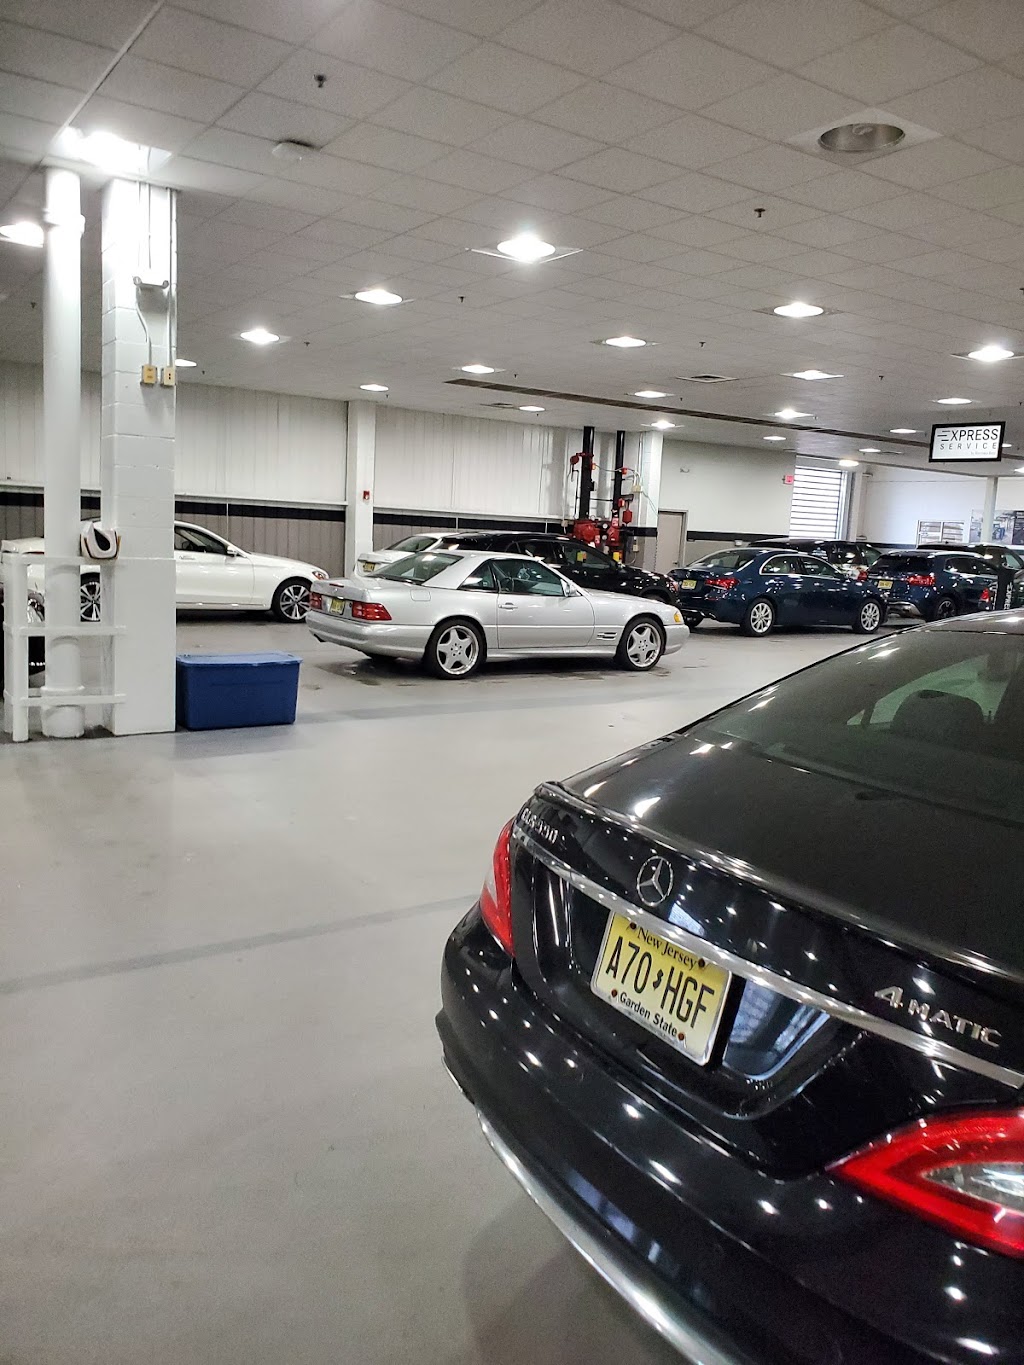 Mercedes-Benz of Morristown Sales & Leasing | 34 Ridgedale Ave, Morristown, NJ 07960 | Phone: (973) 267-5000